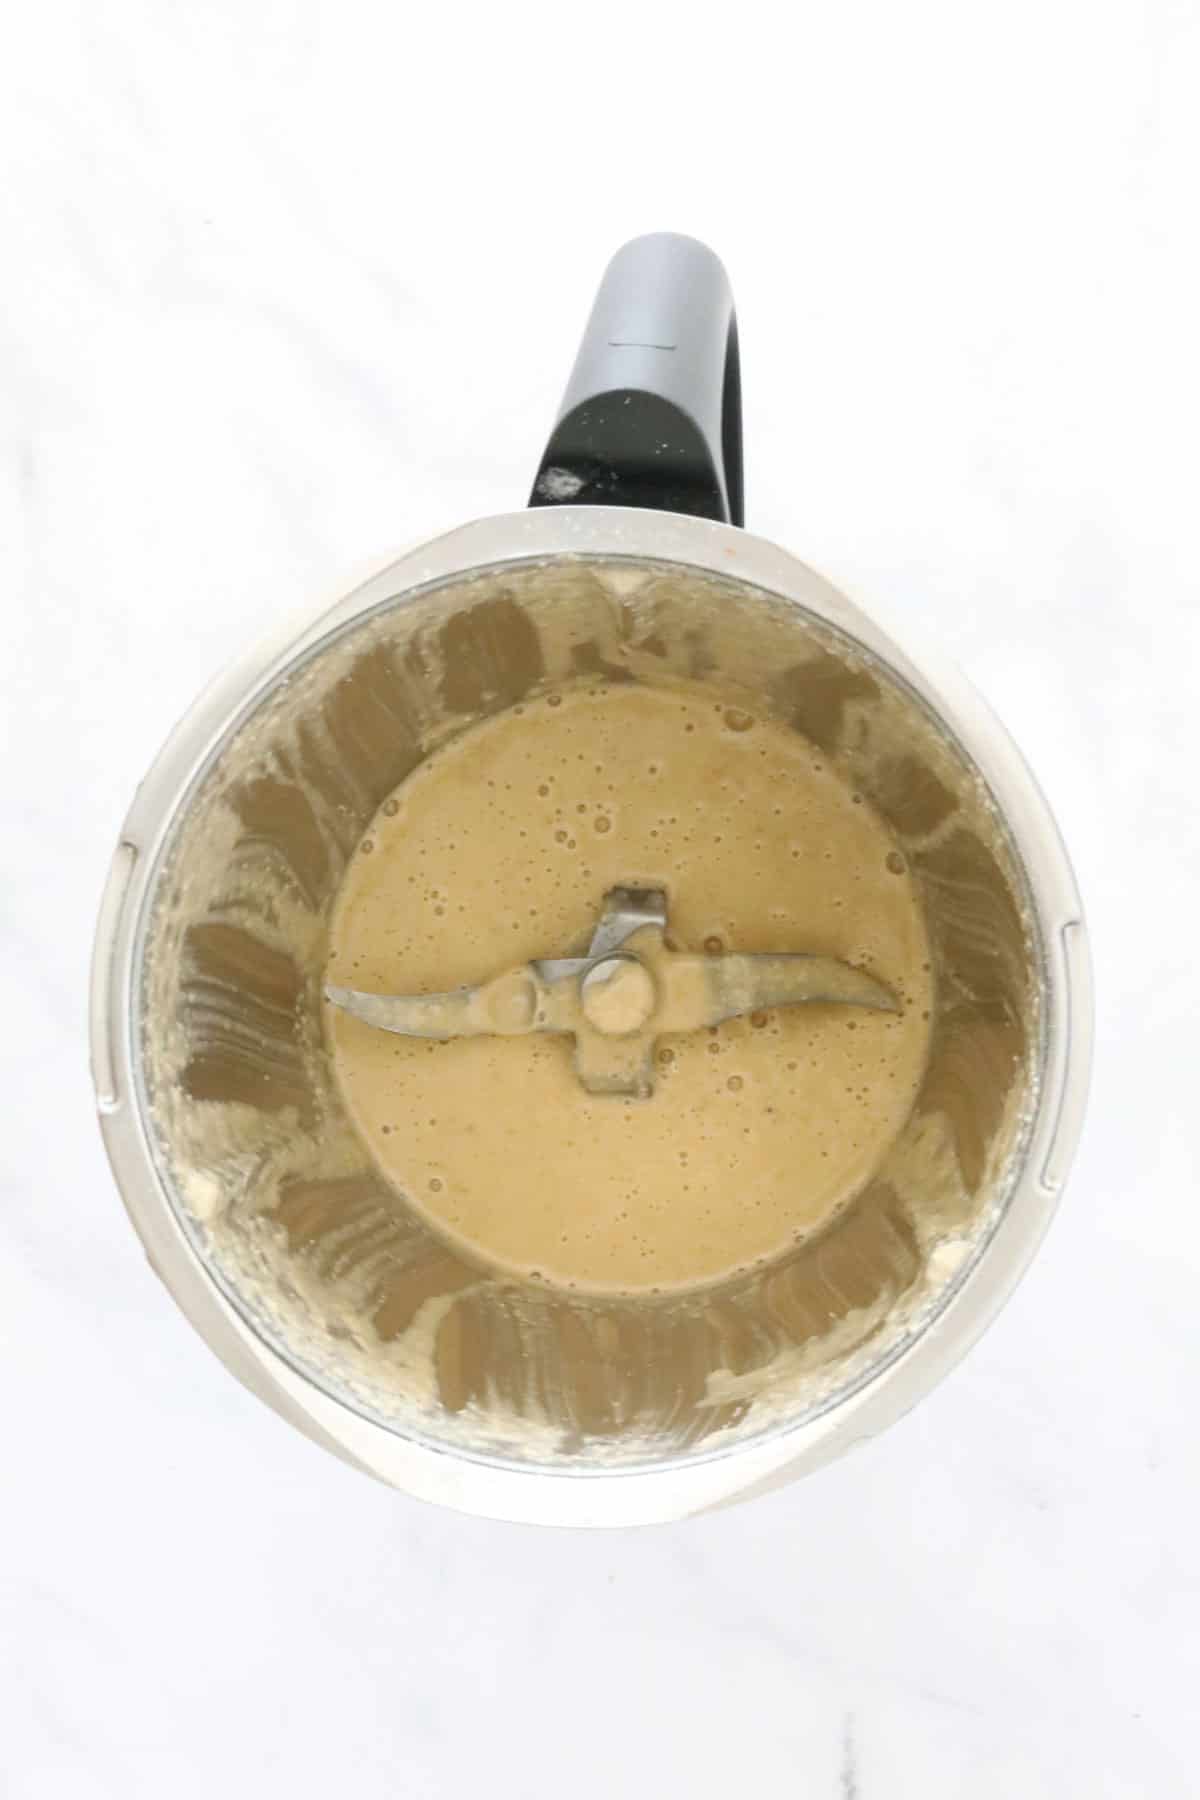 Blended pancake batter in a blender.